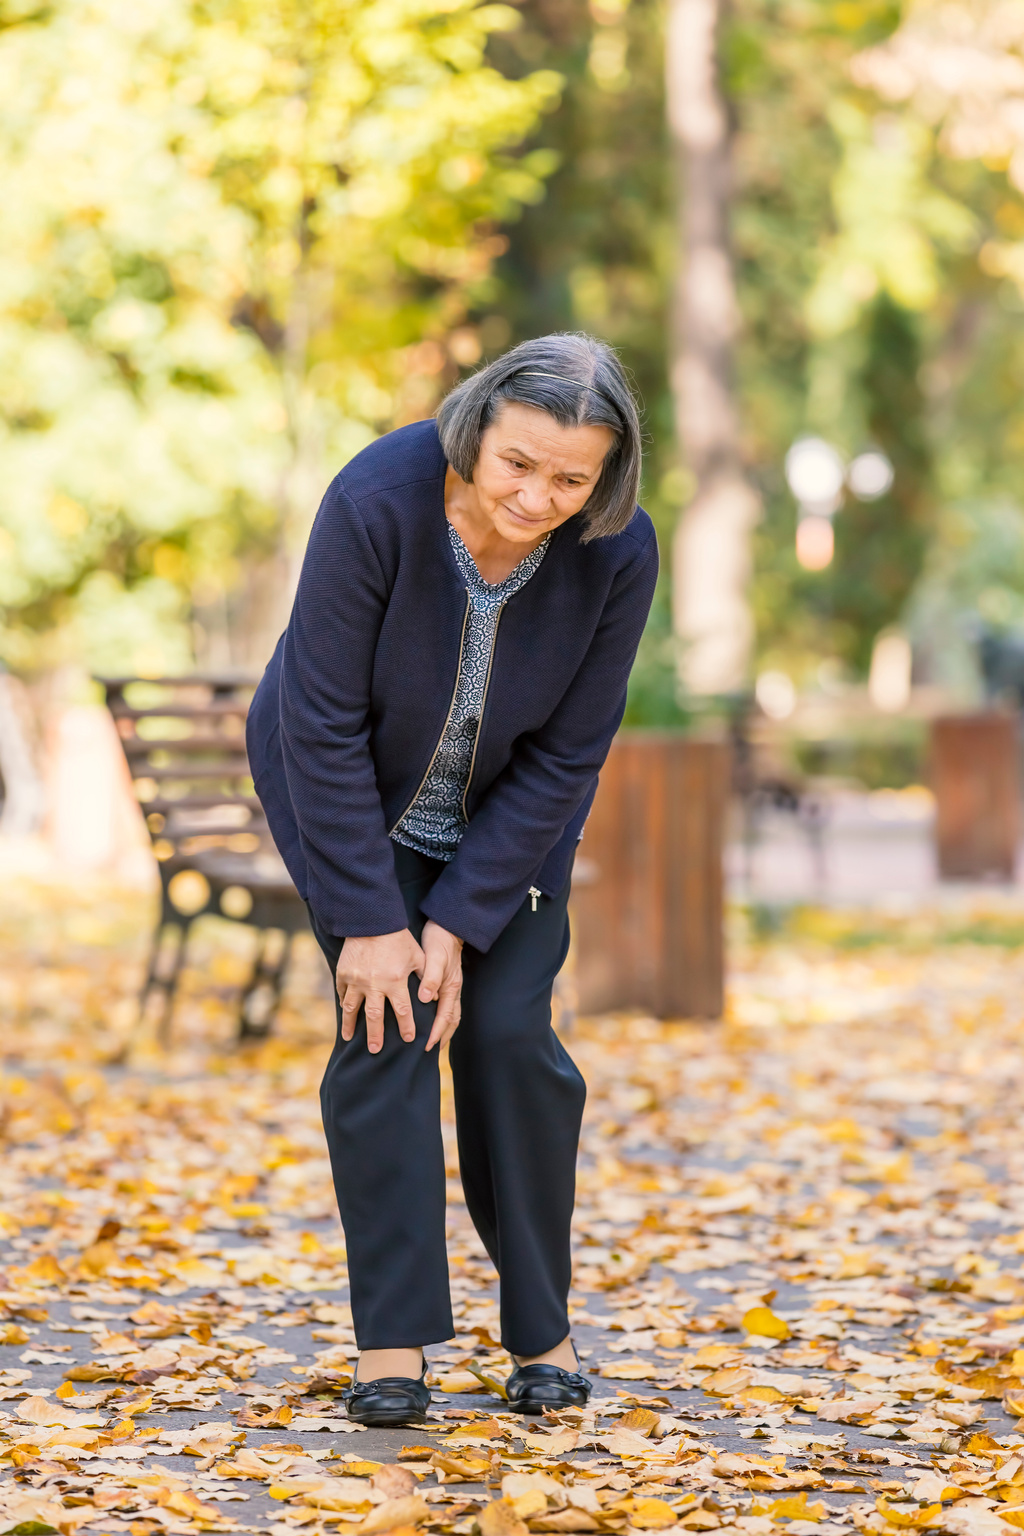 Senior woman having knee pain in park